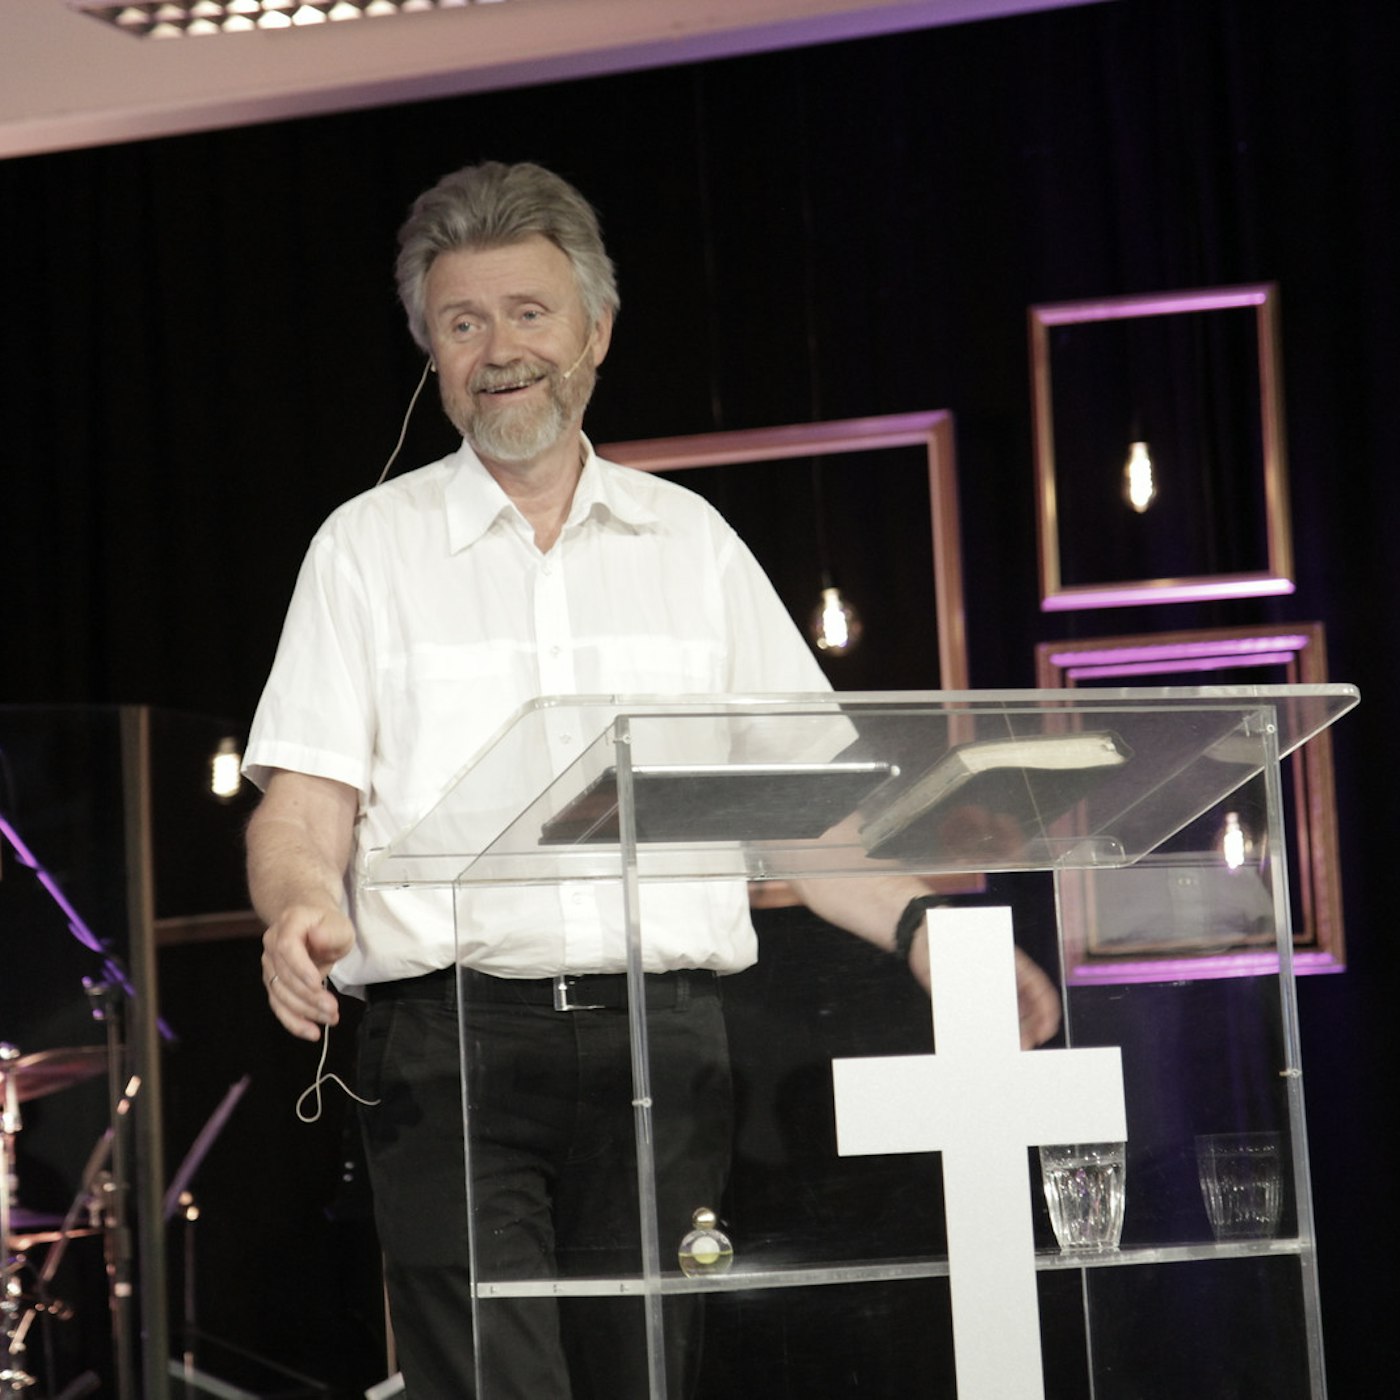 Pastor Harald Fylling